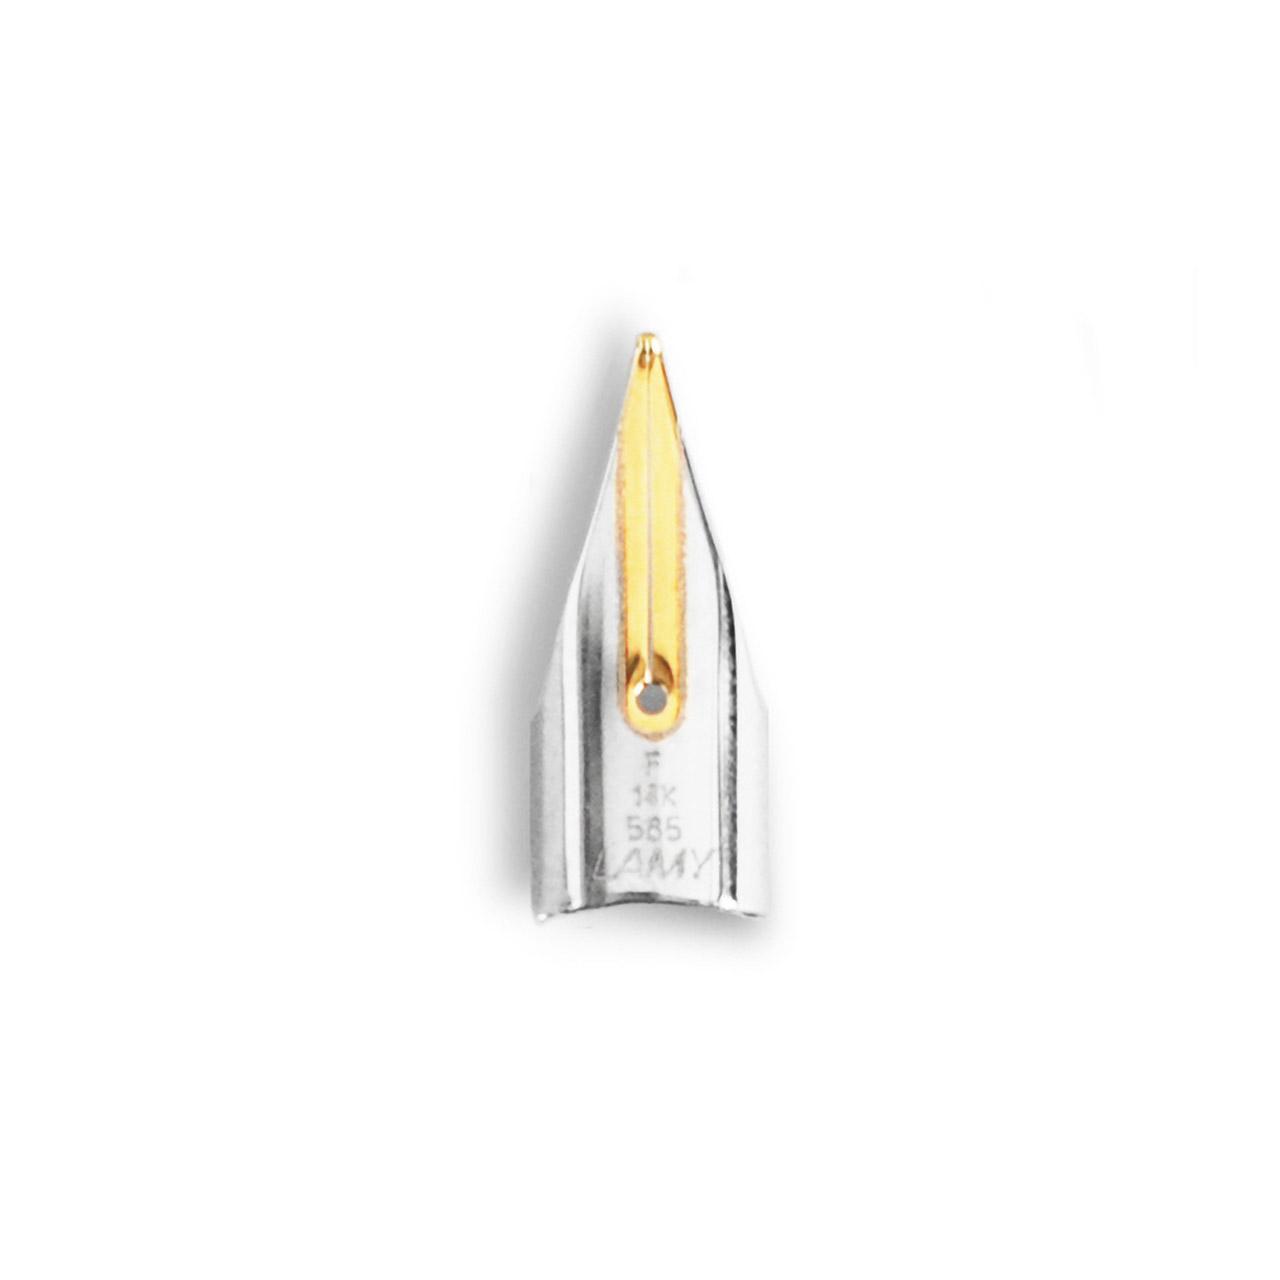 z55 14Kt Gold Two-Tone Fountain Pen Nib